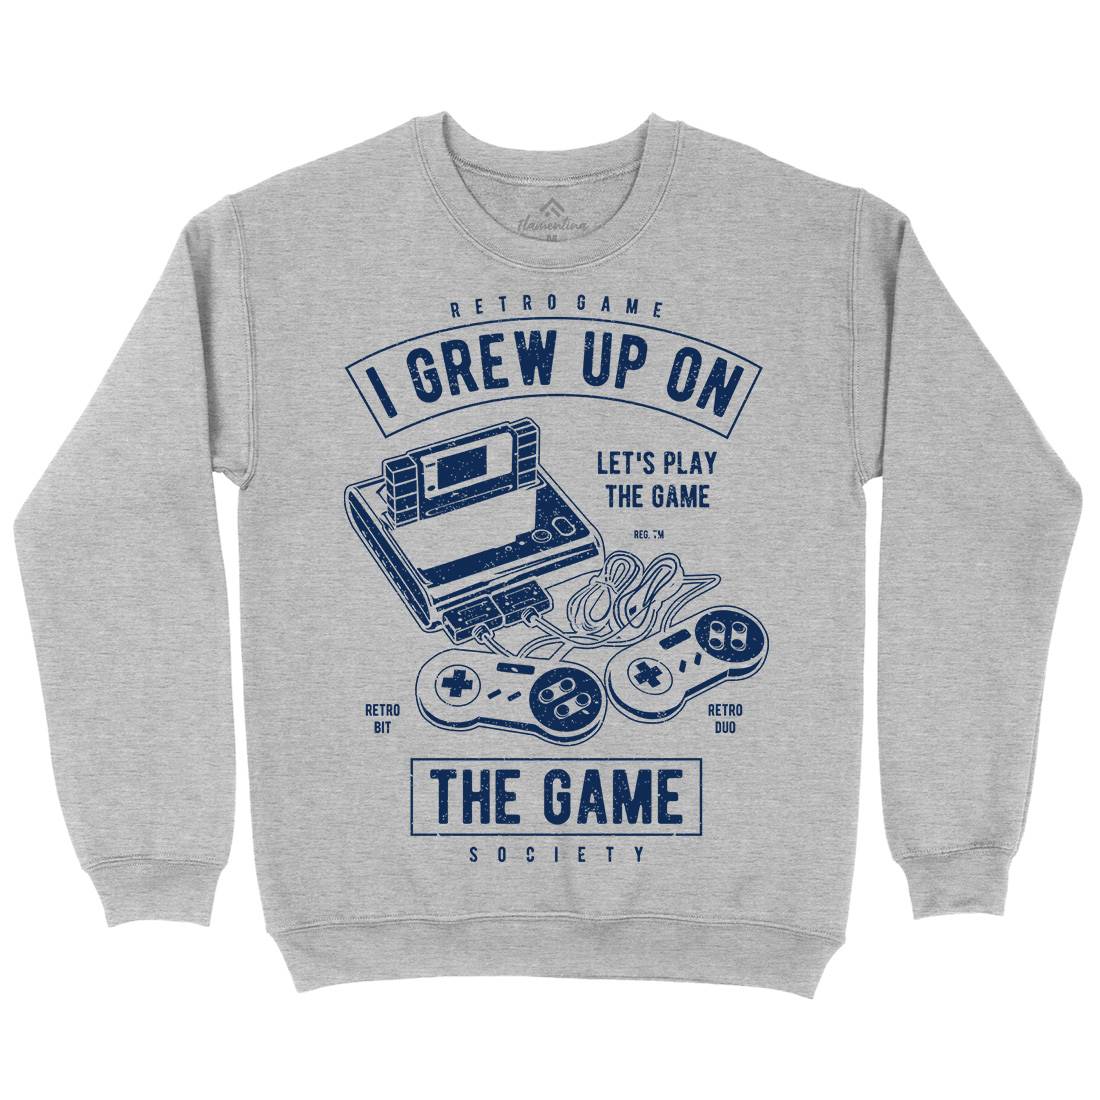 Grew Up On The Game Kids Crew Neck Sweatshirt Geek A679